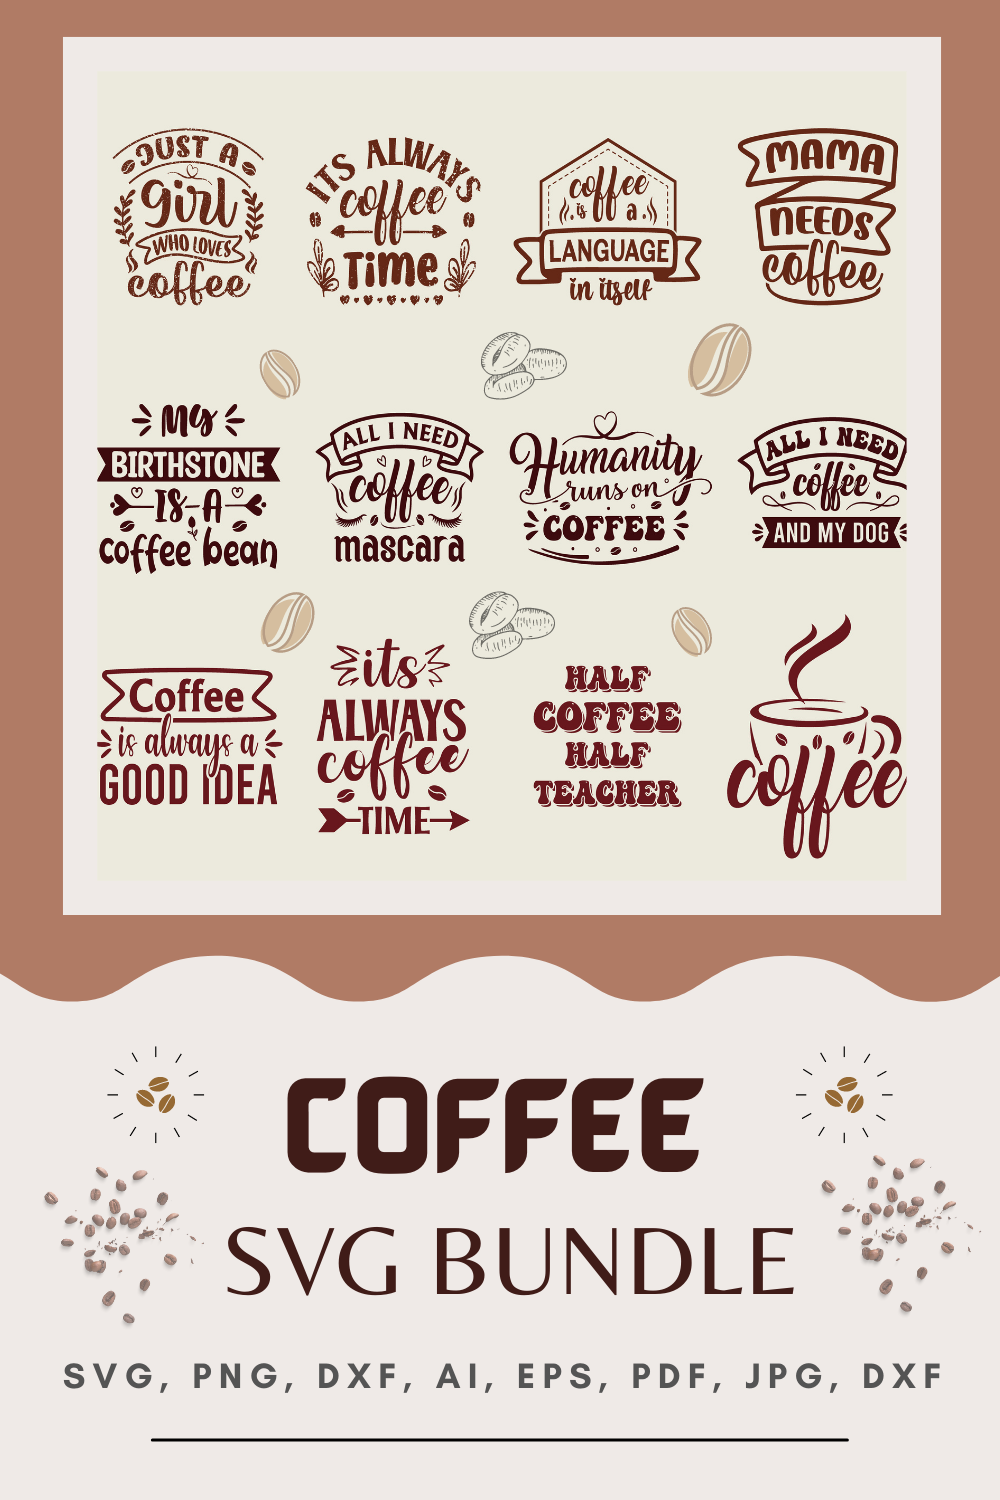 Coffee Quotes SVG Bundle pinterest image.